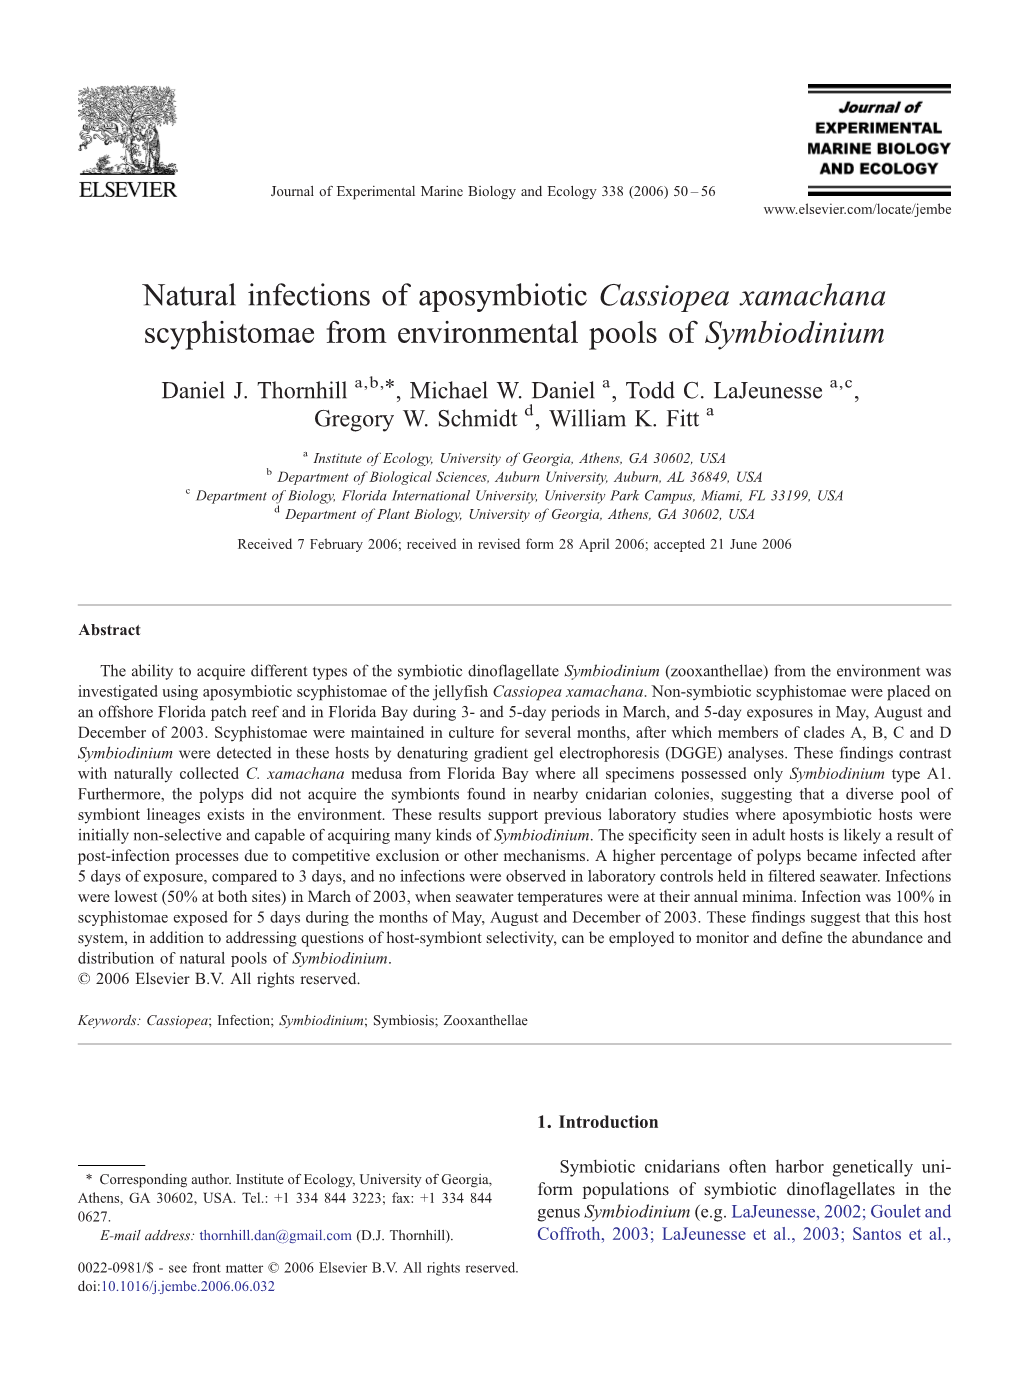 Cassiopea Xamachana Scyphistomae from Environmental Pools of Symbiodinium ⁎ Daniel J